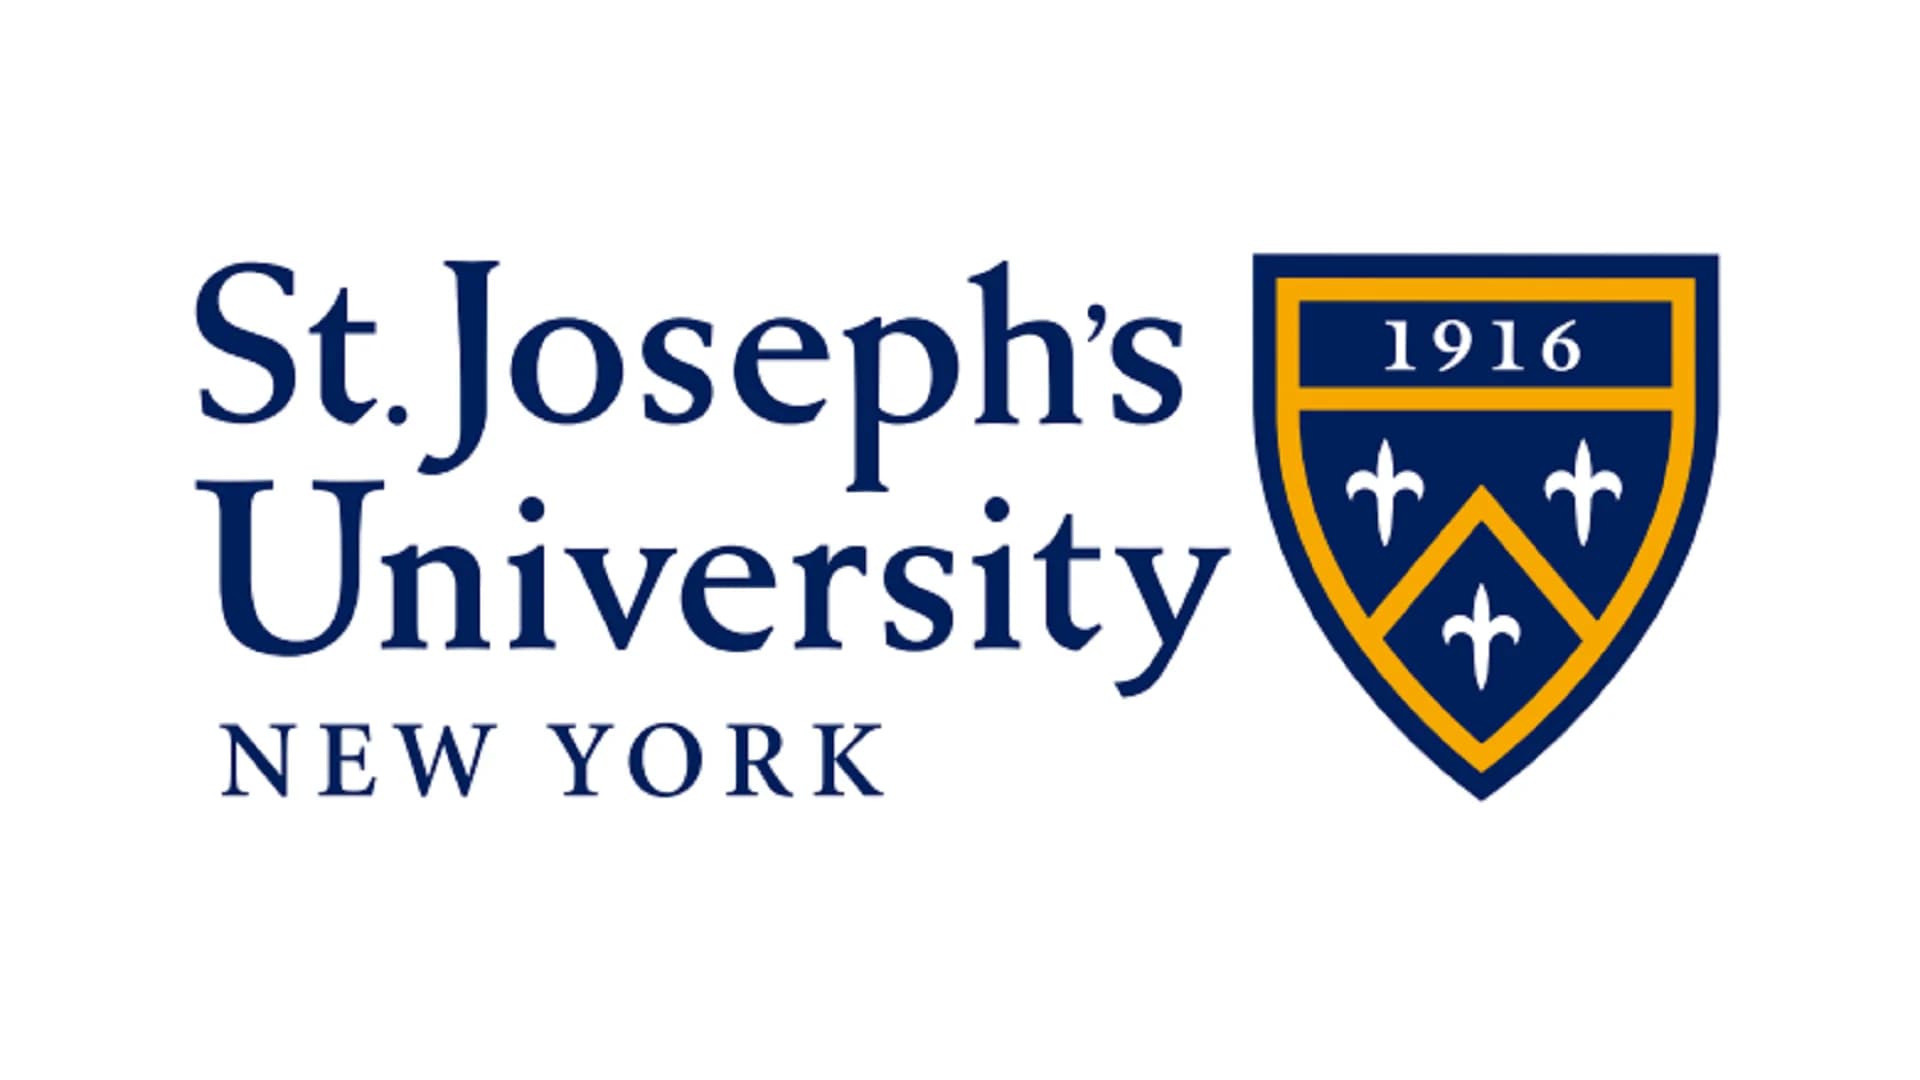 St. Joseph's College elevated to university status